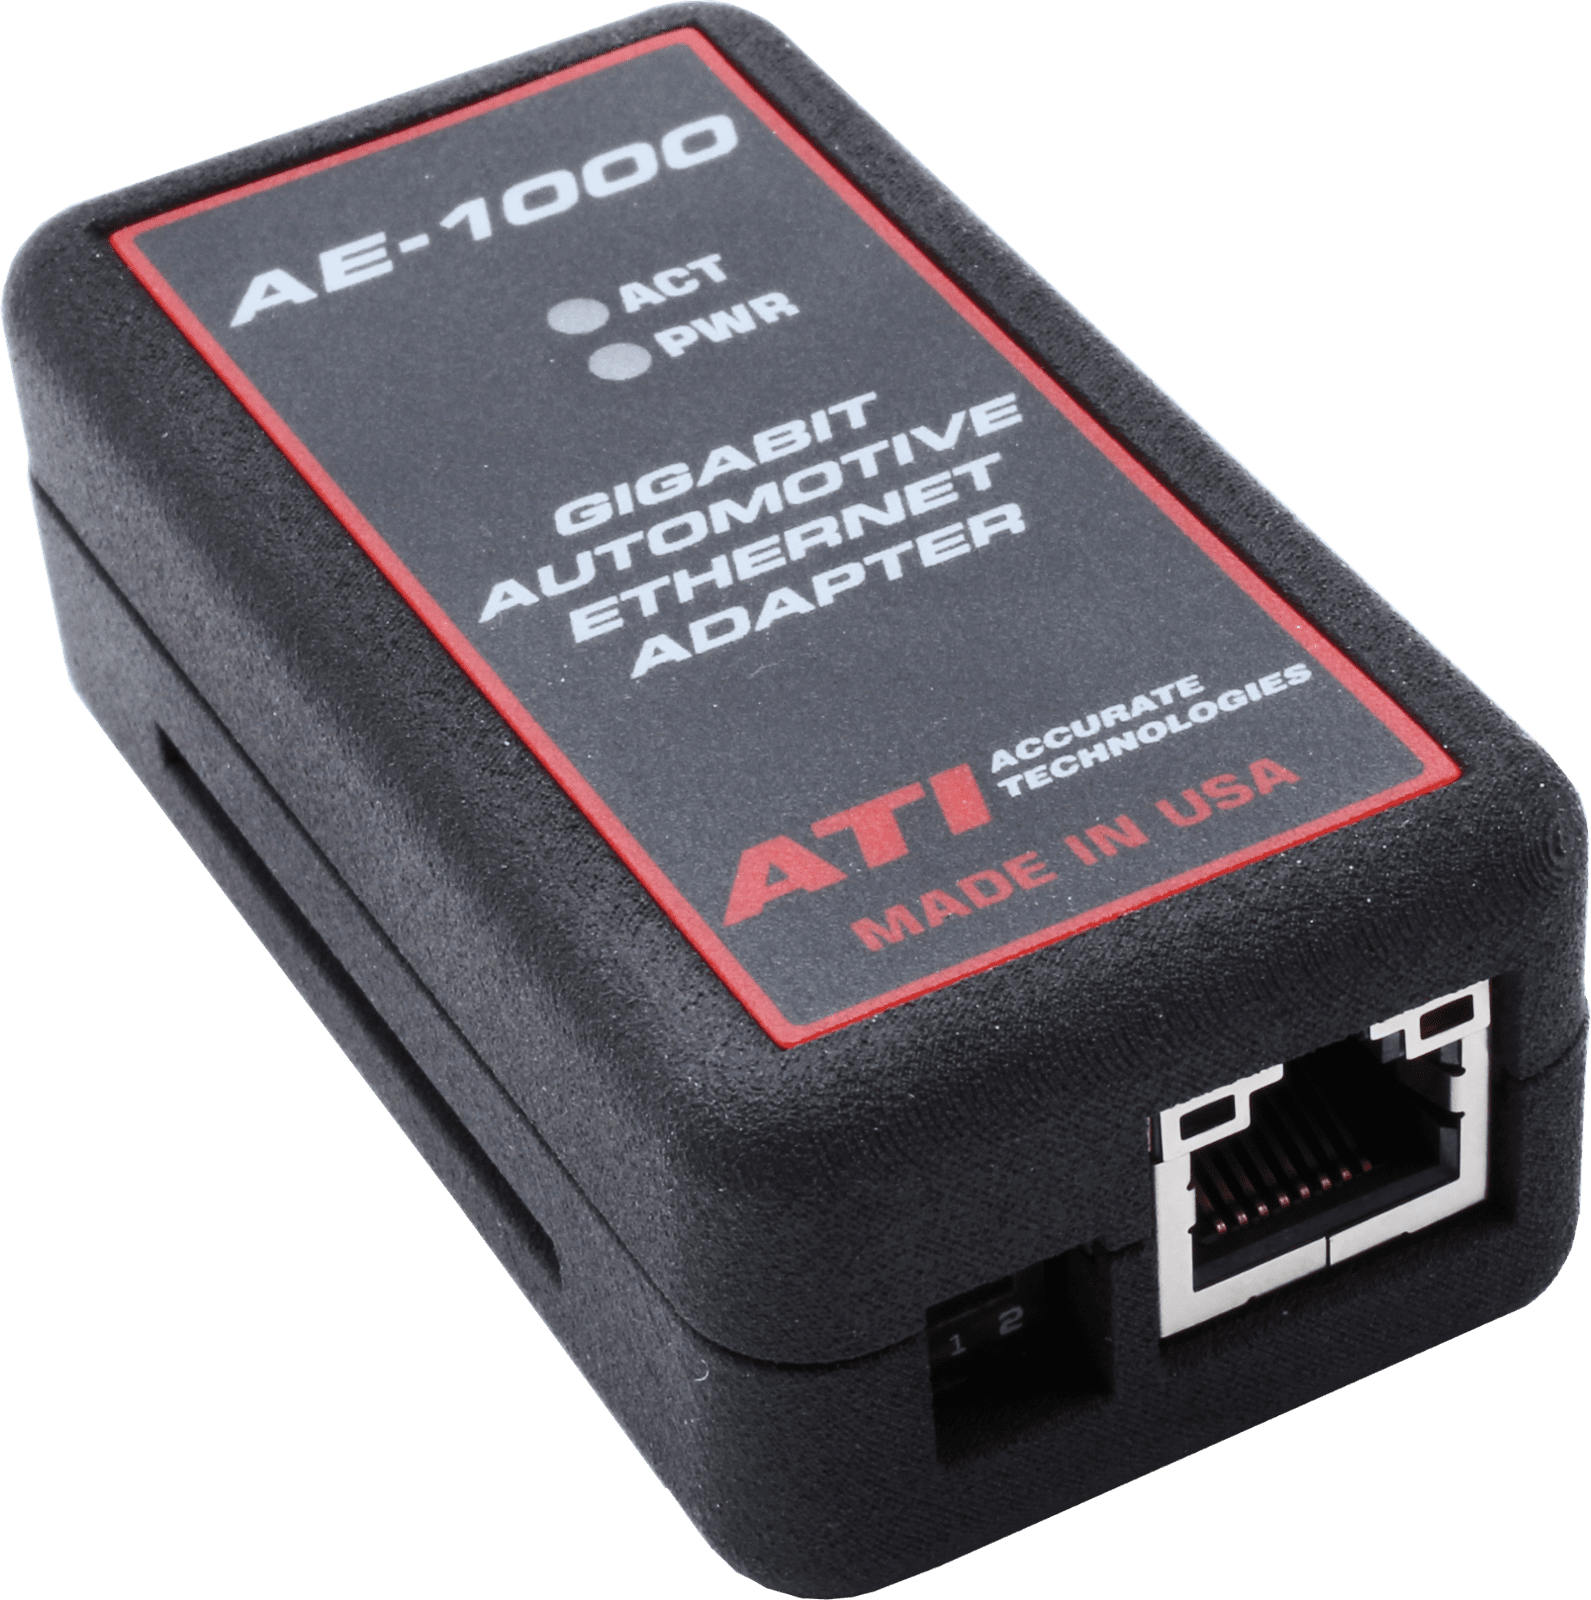 AE-1000 Automotive Ethernet Adapter 